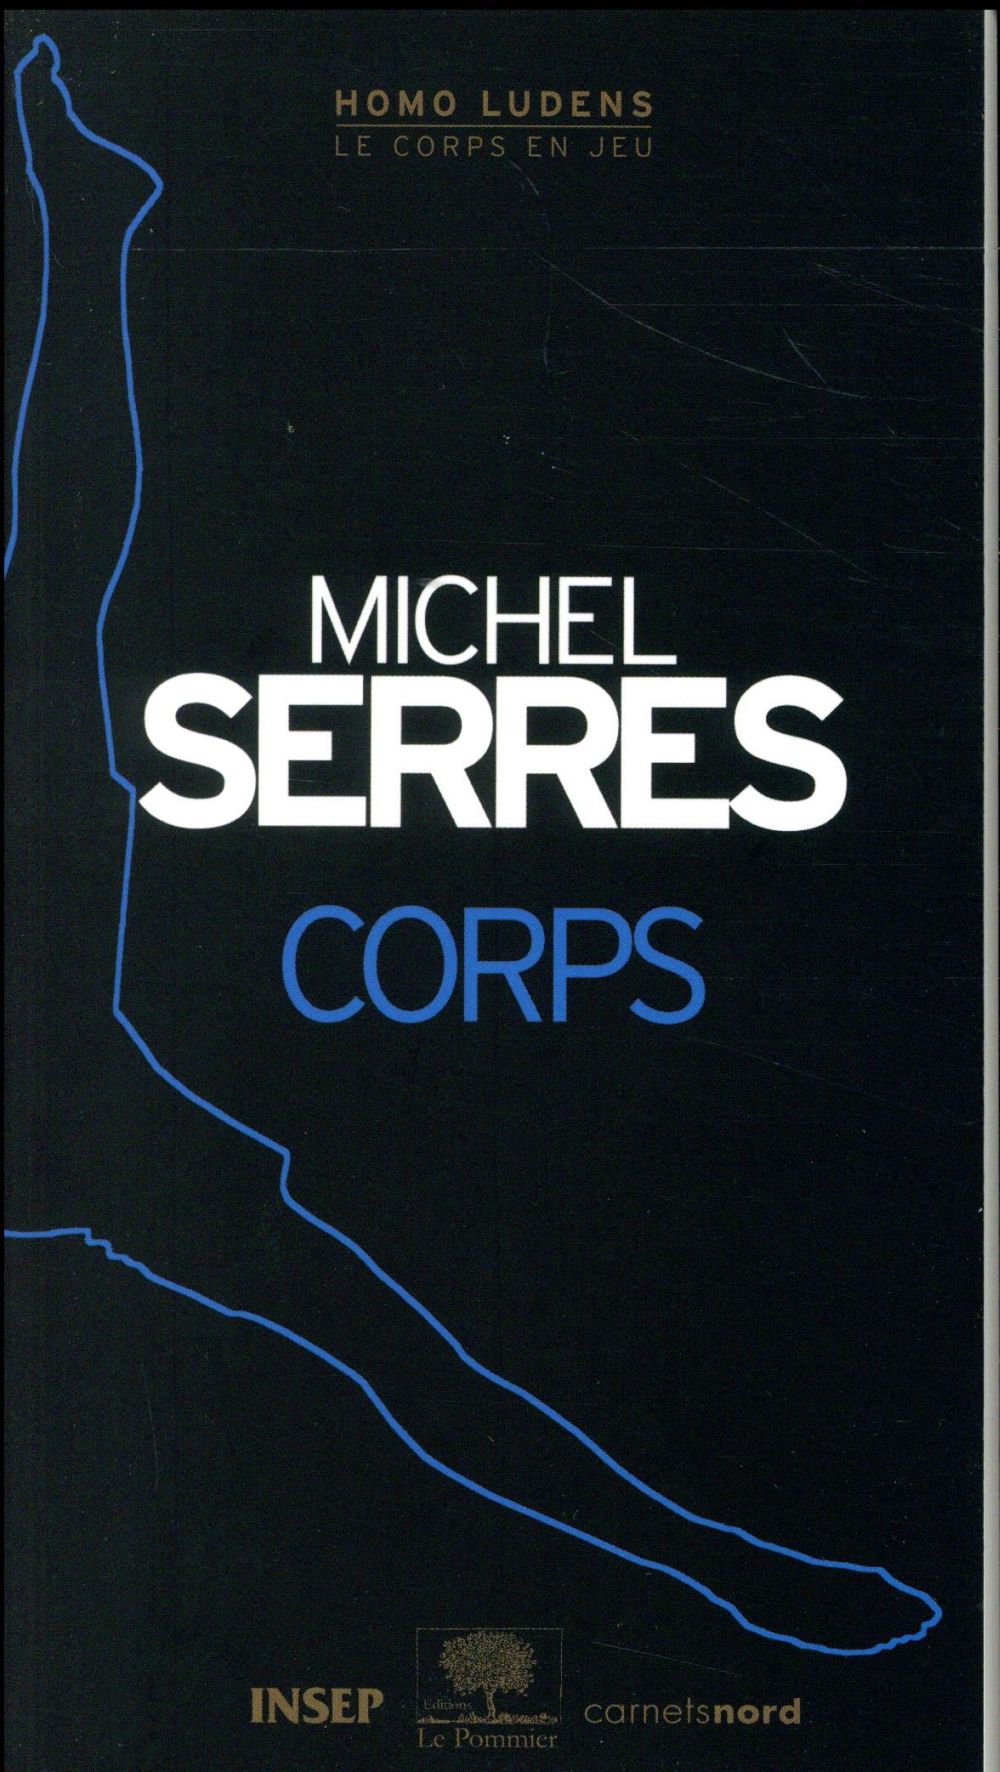 Corps